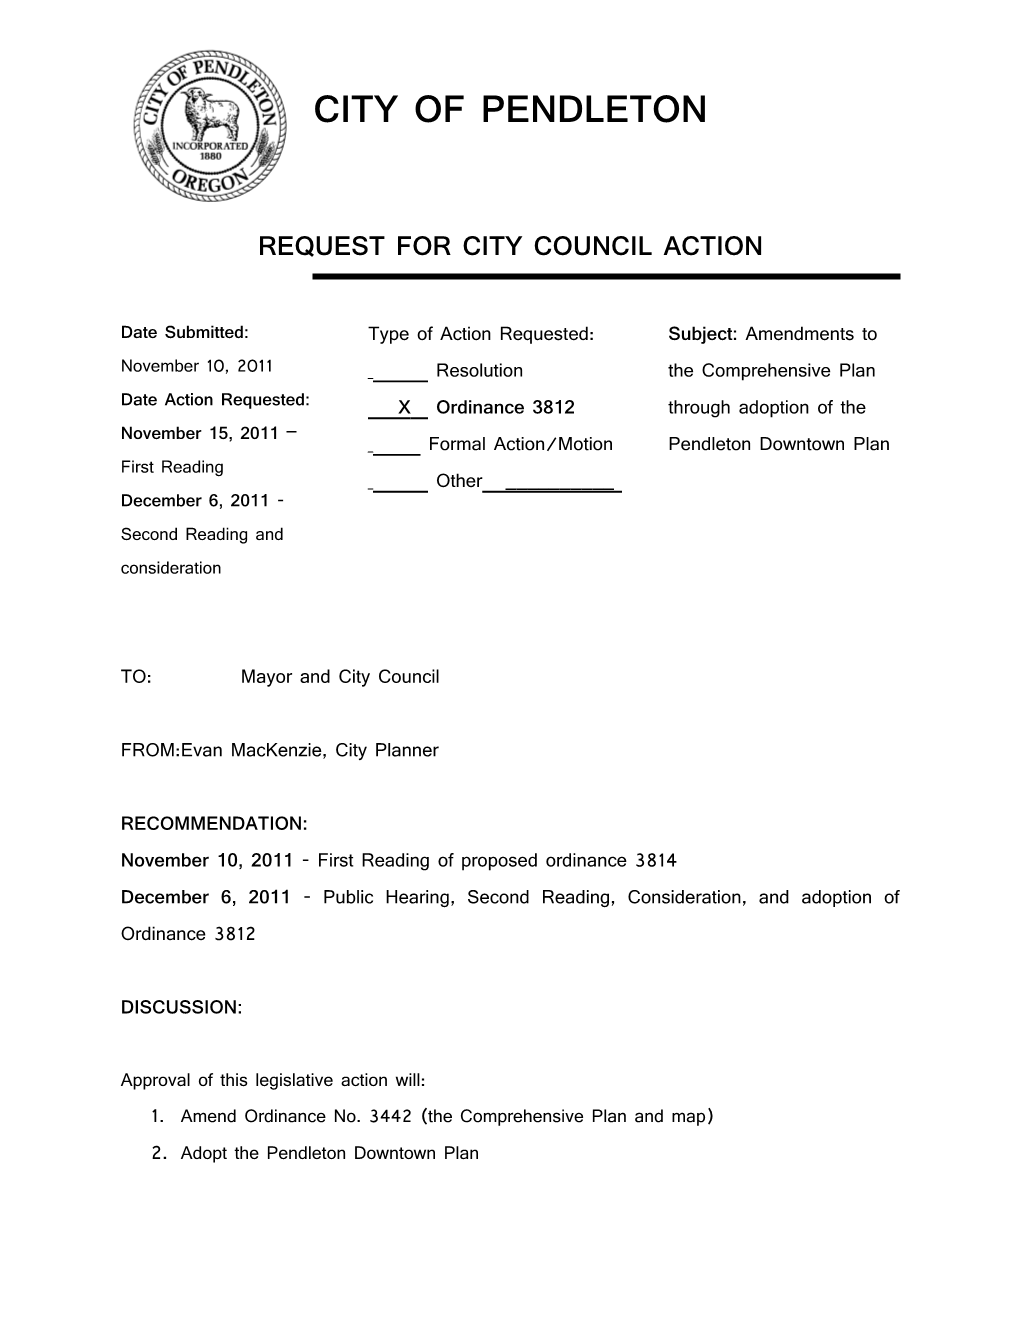 Request for City Council Action